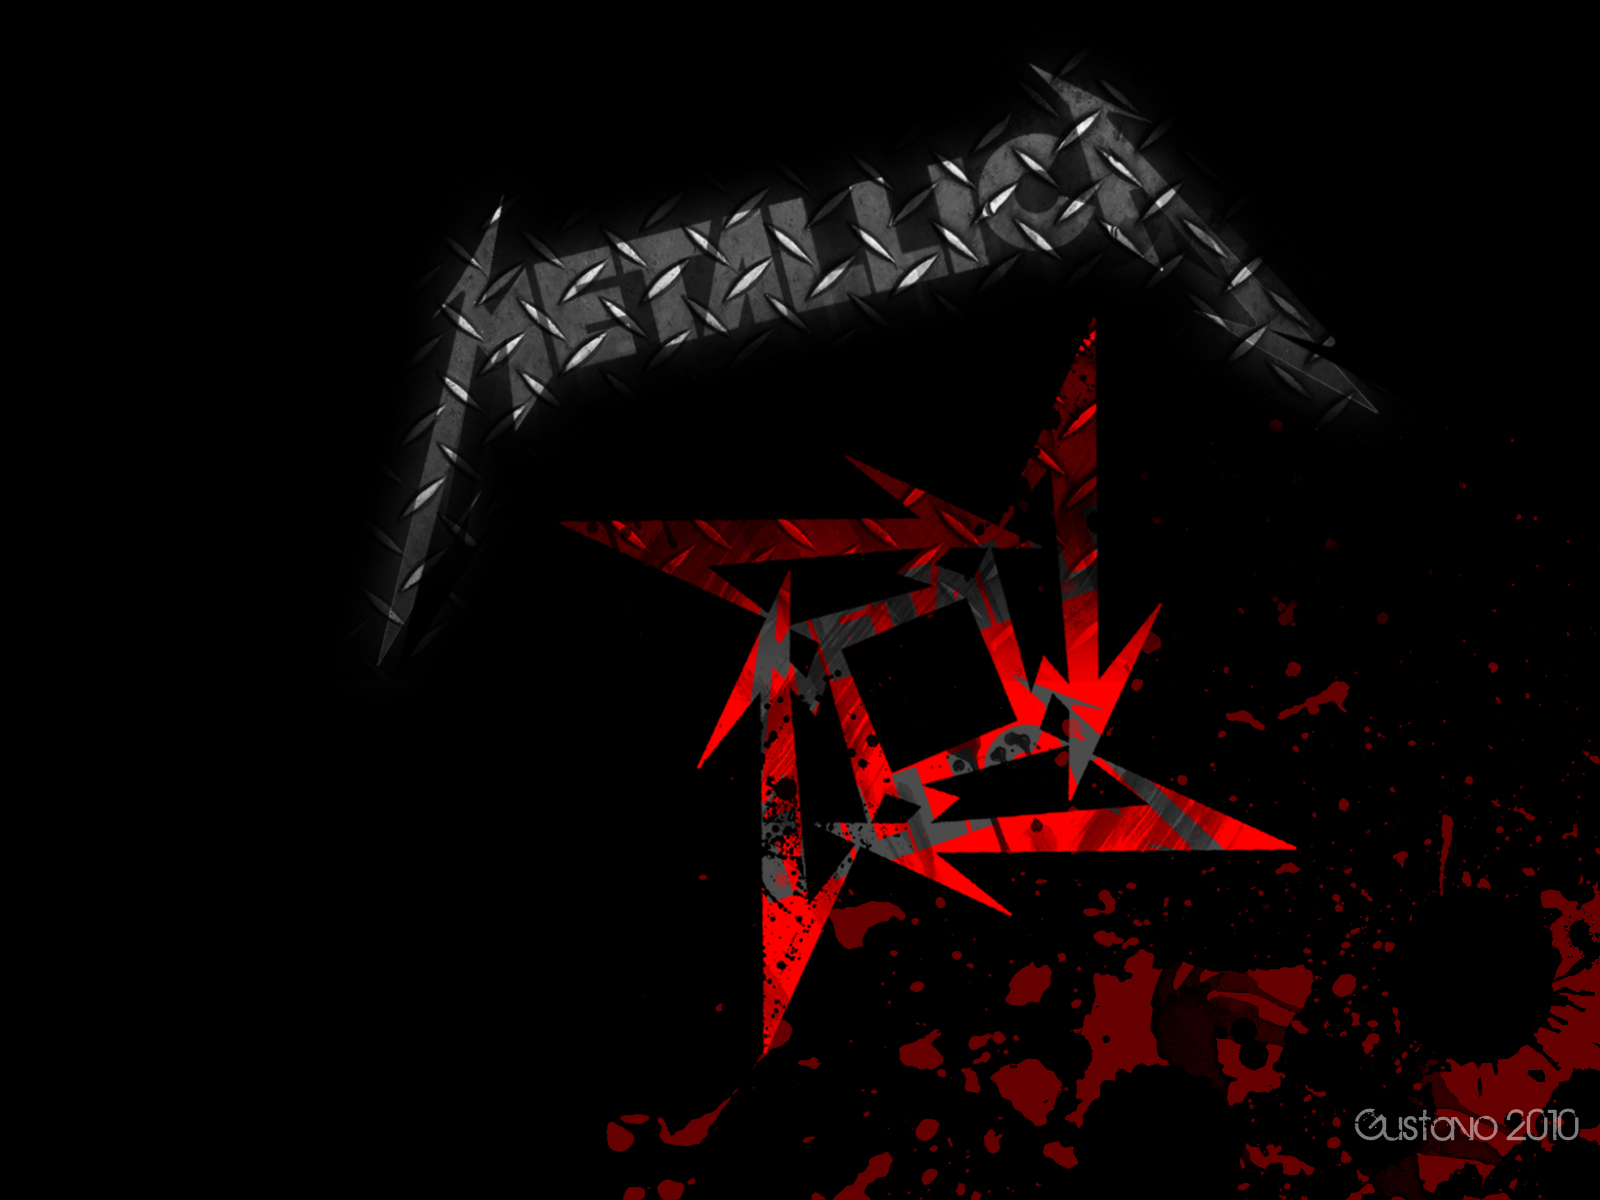 Metallica Wallpaper Background